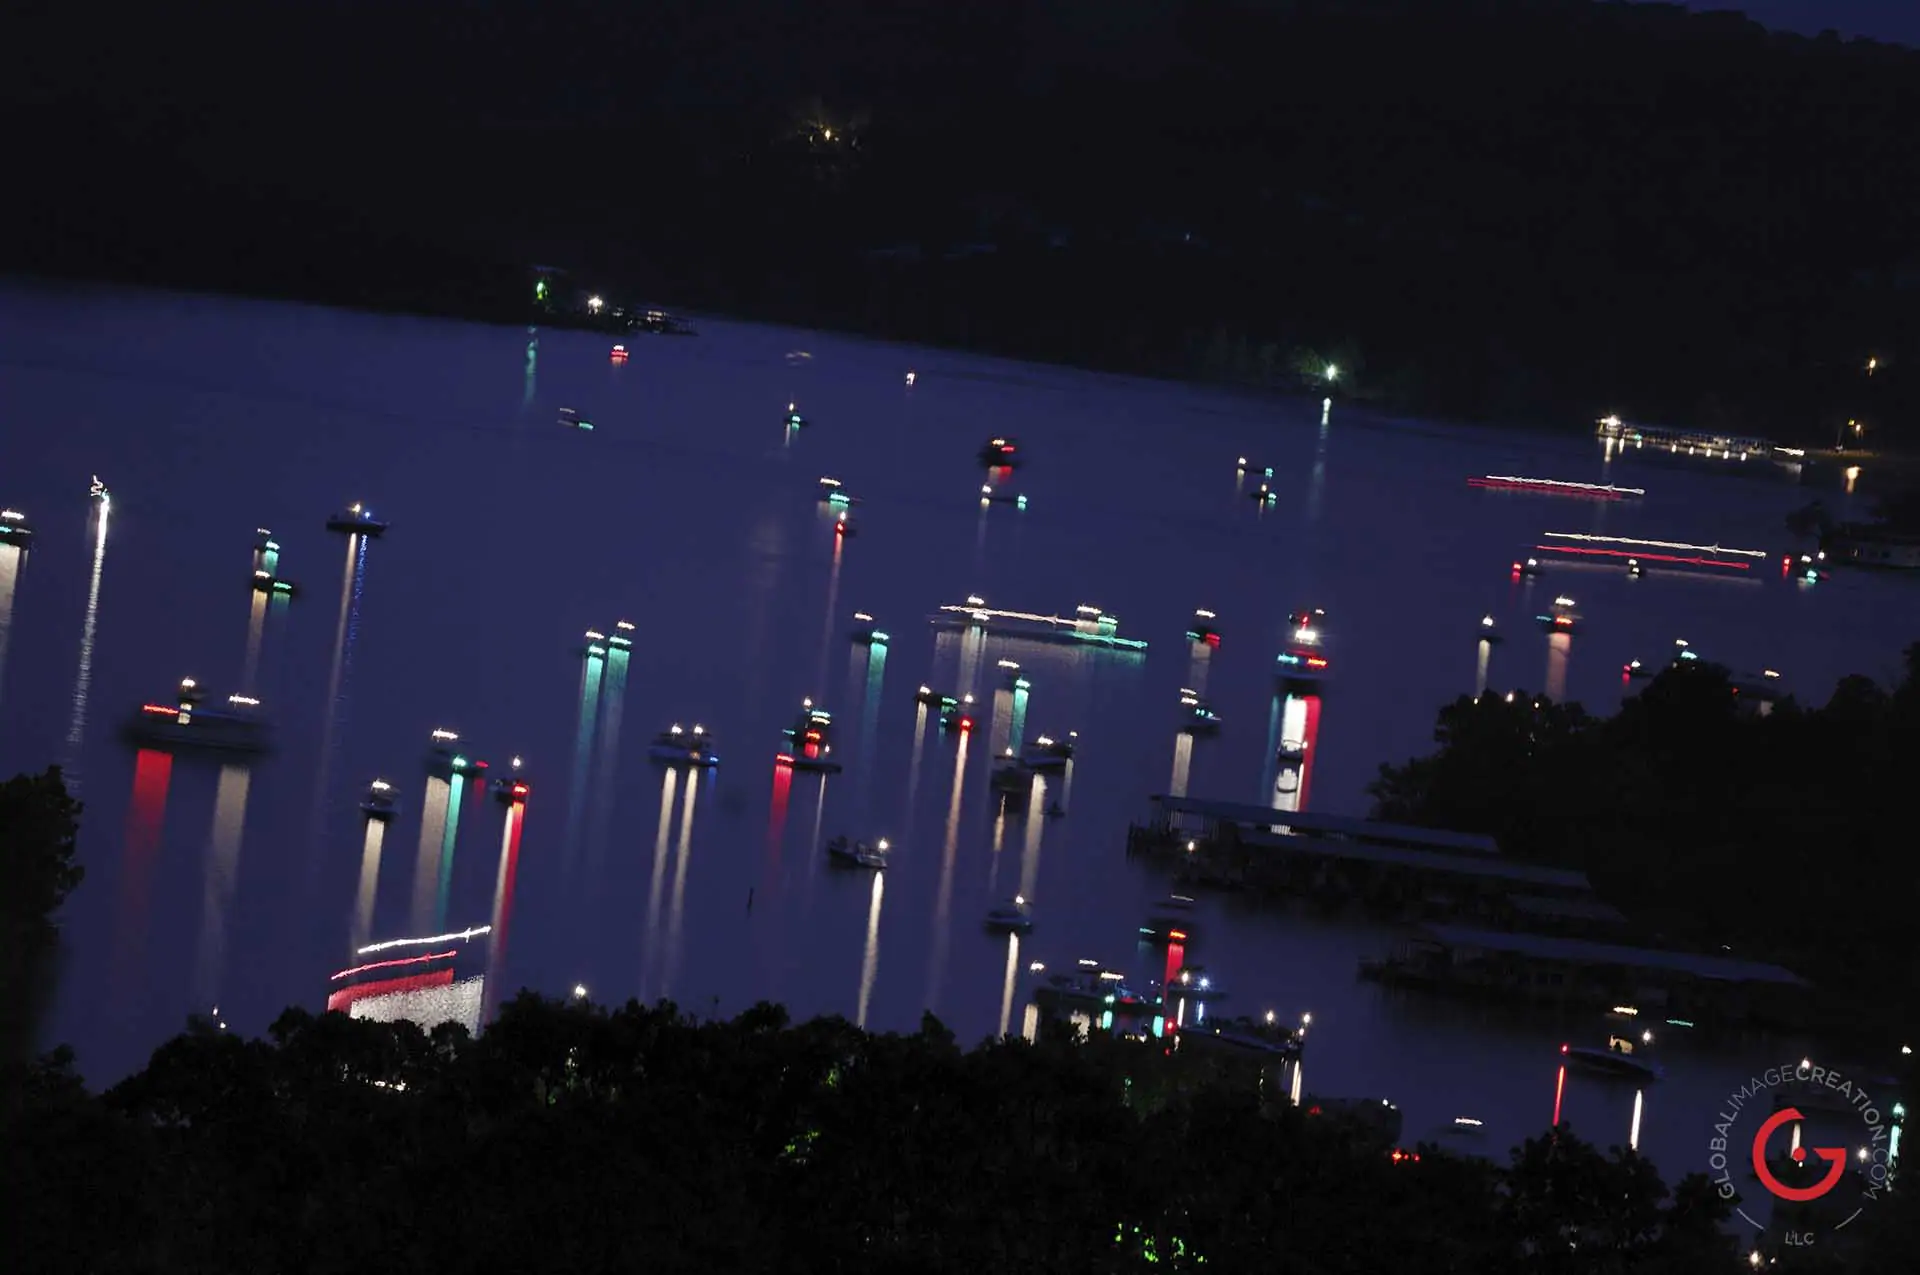 Lit up boats on table rock lake at night. - Advertising photographers in Branson Missouri, Branson Missouri photography